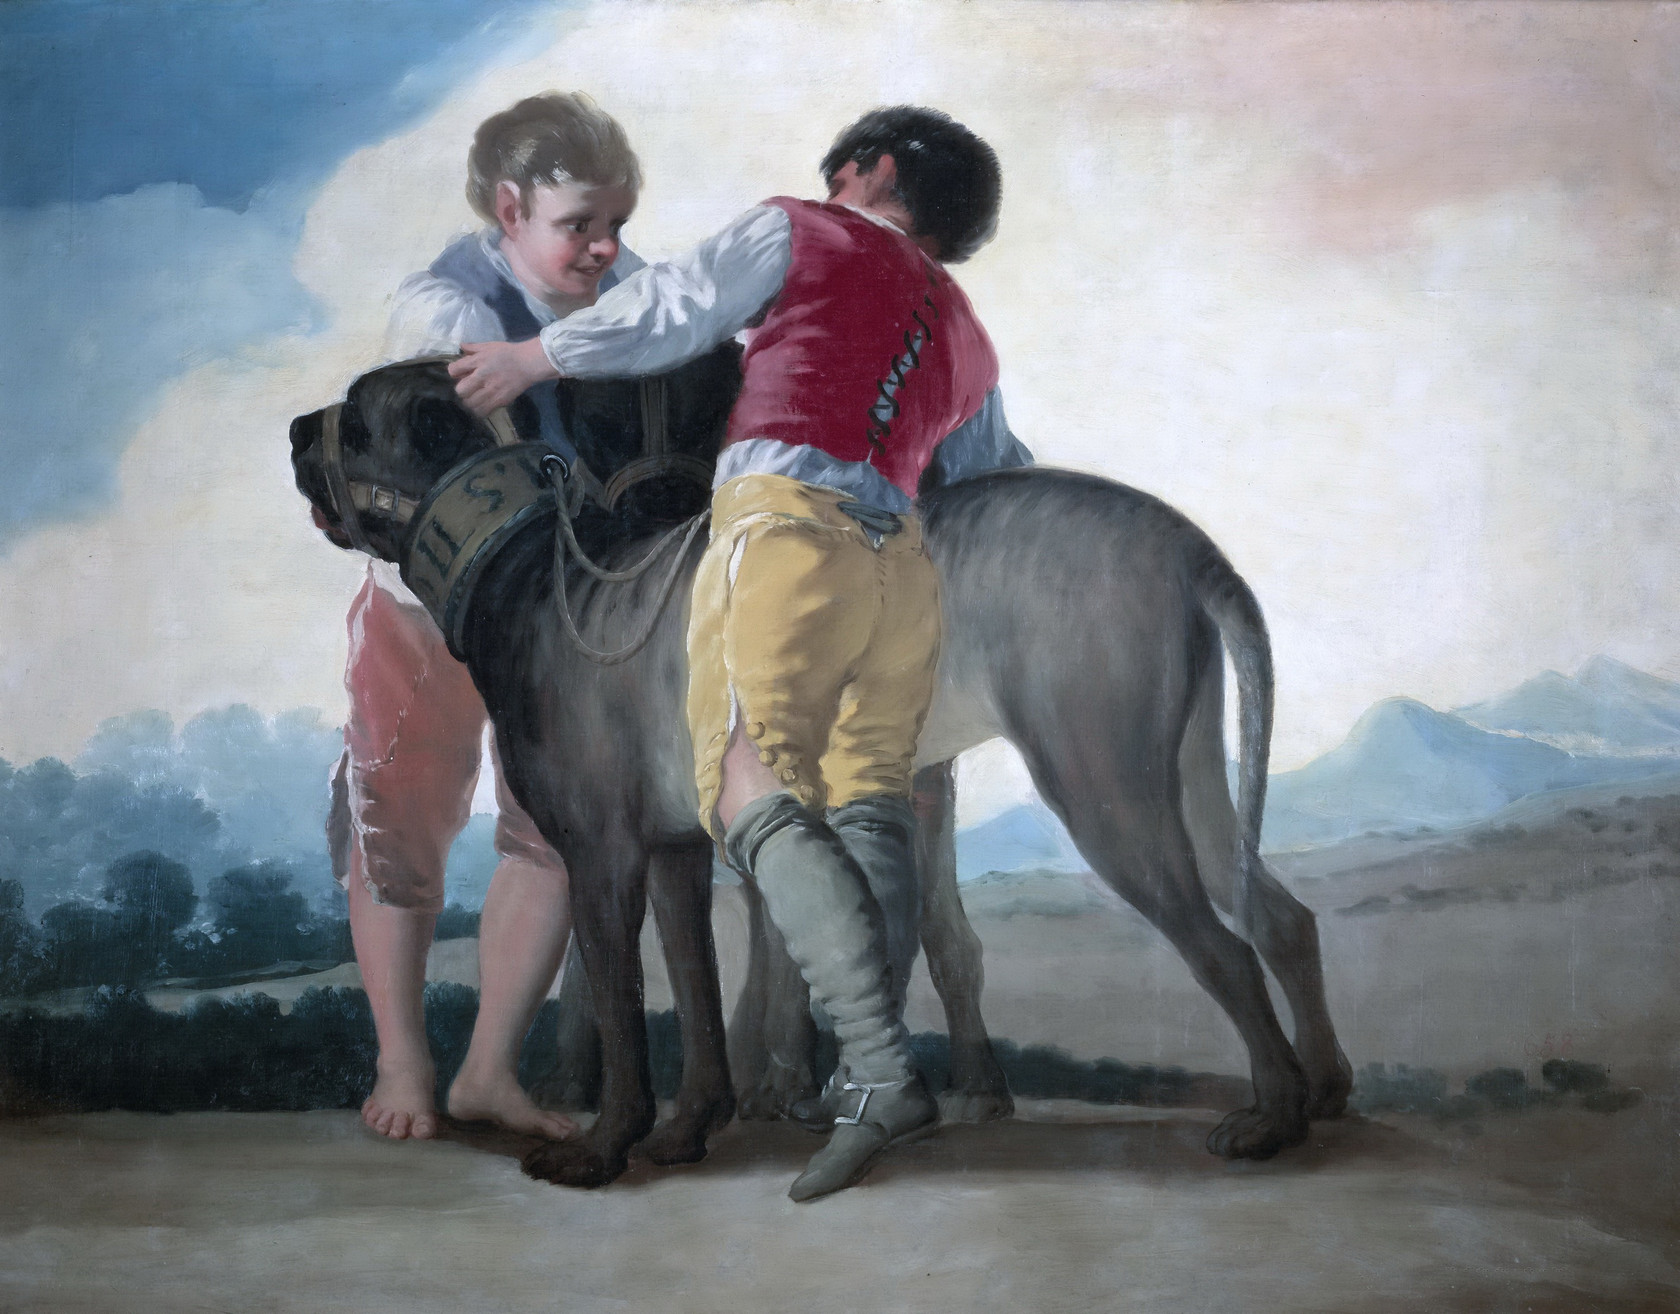 Картина - Дети с собаками, 1786 - Музей Прадо